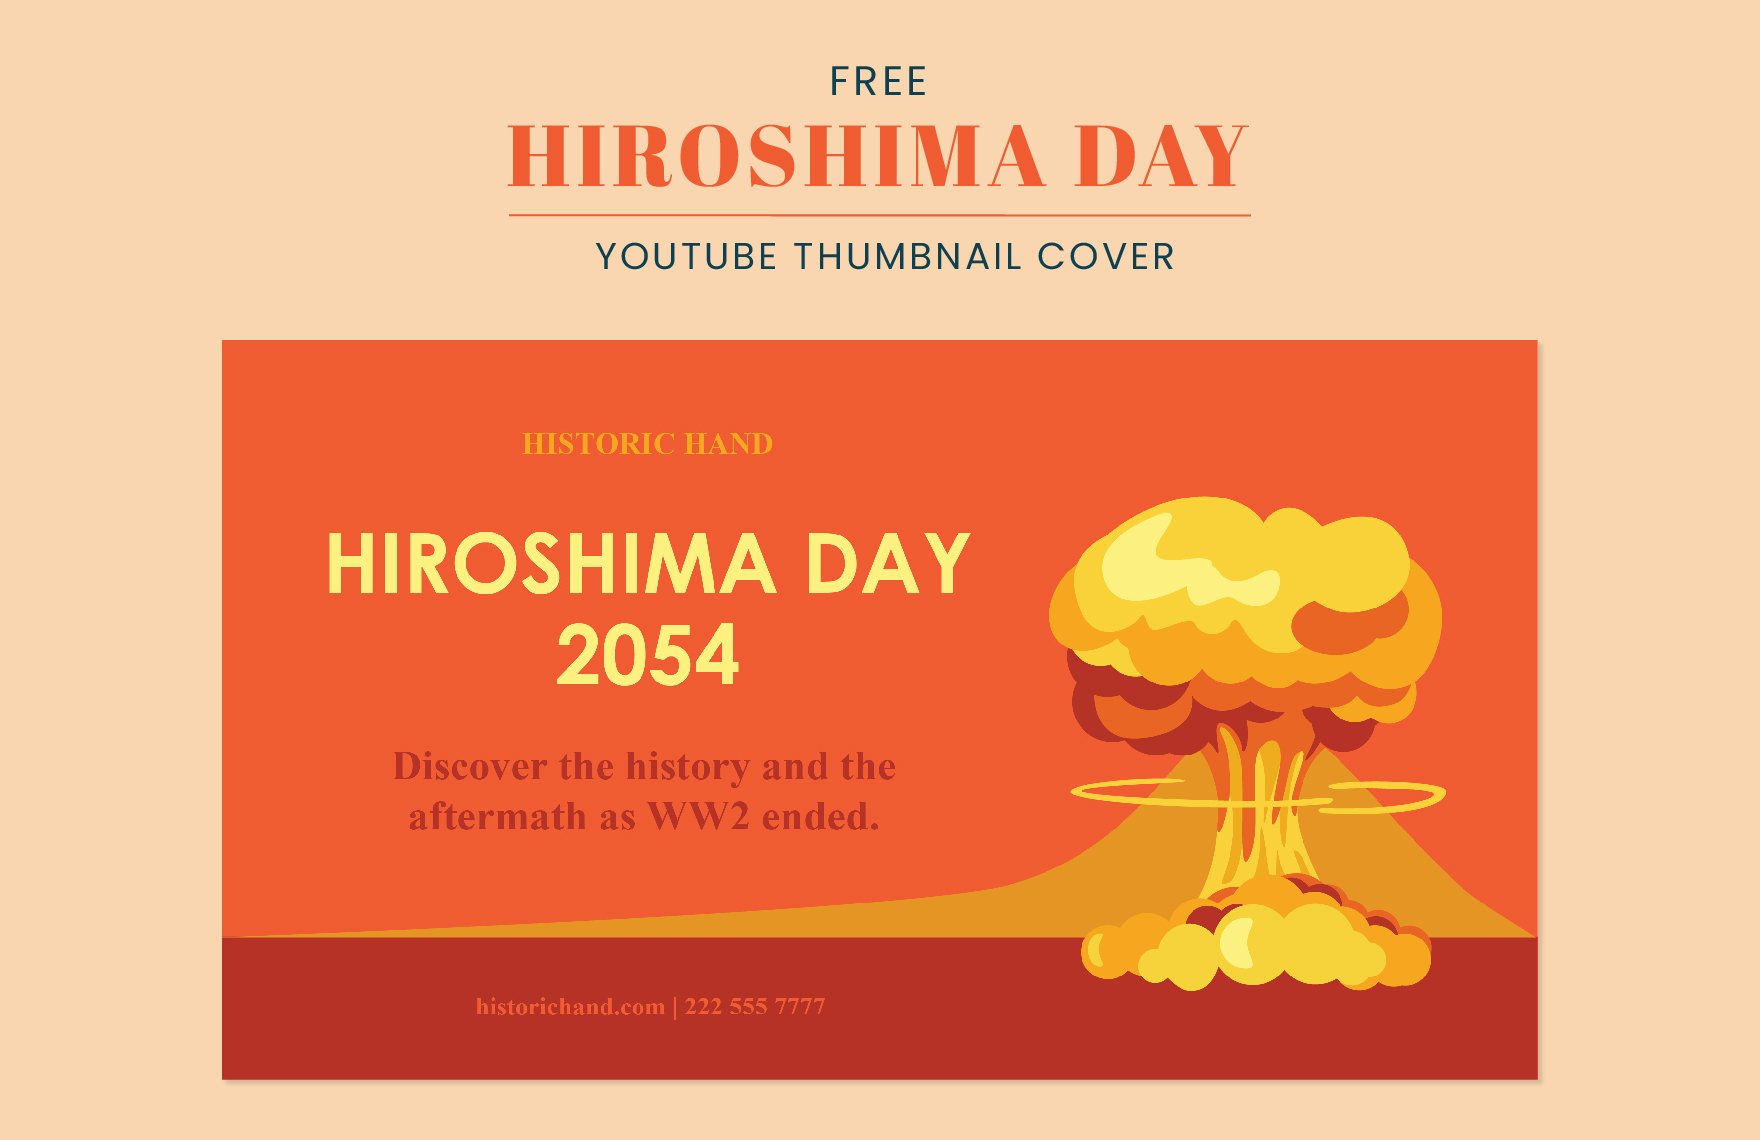 Free Hiroshima Day Youtube Thumbnail Cover